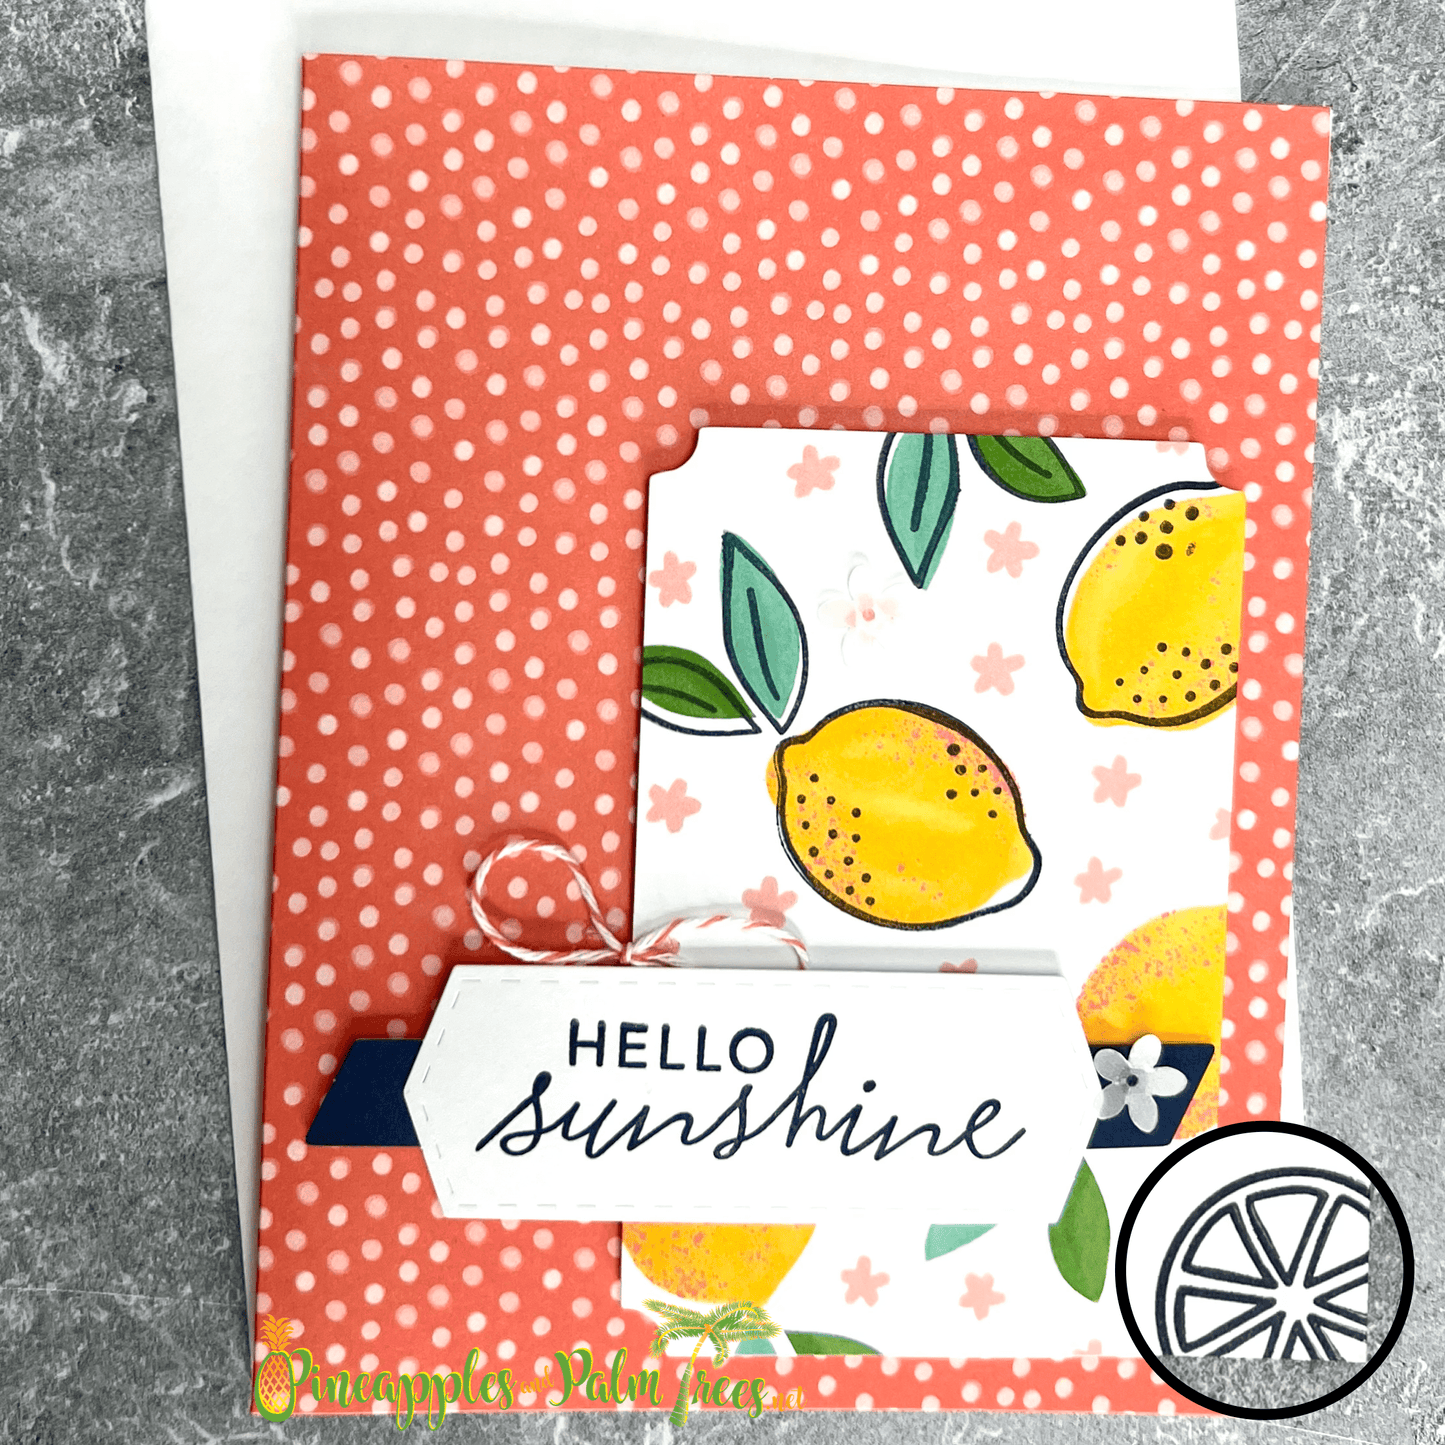 Greeting Card: Hello Sunshine - lemons